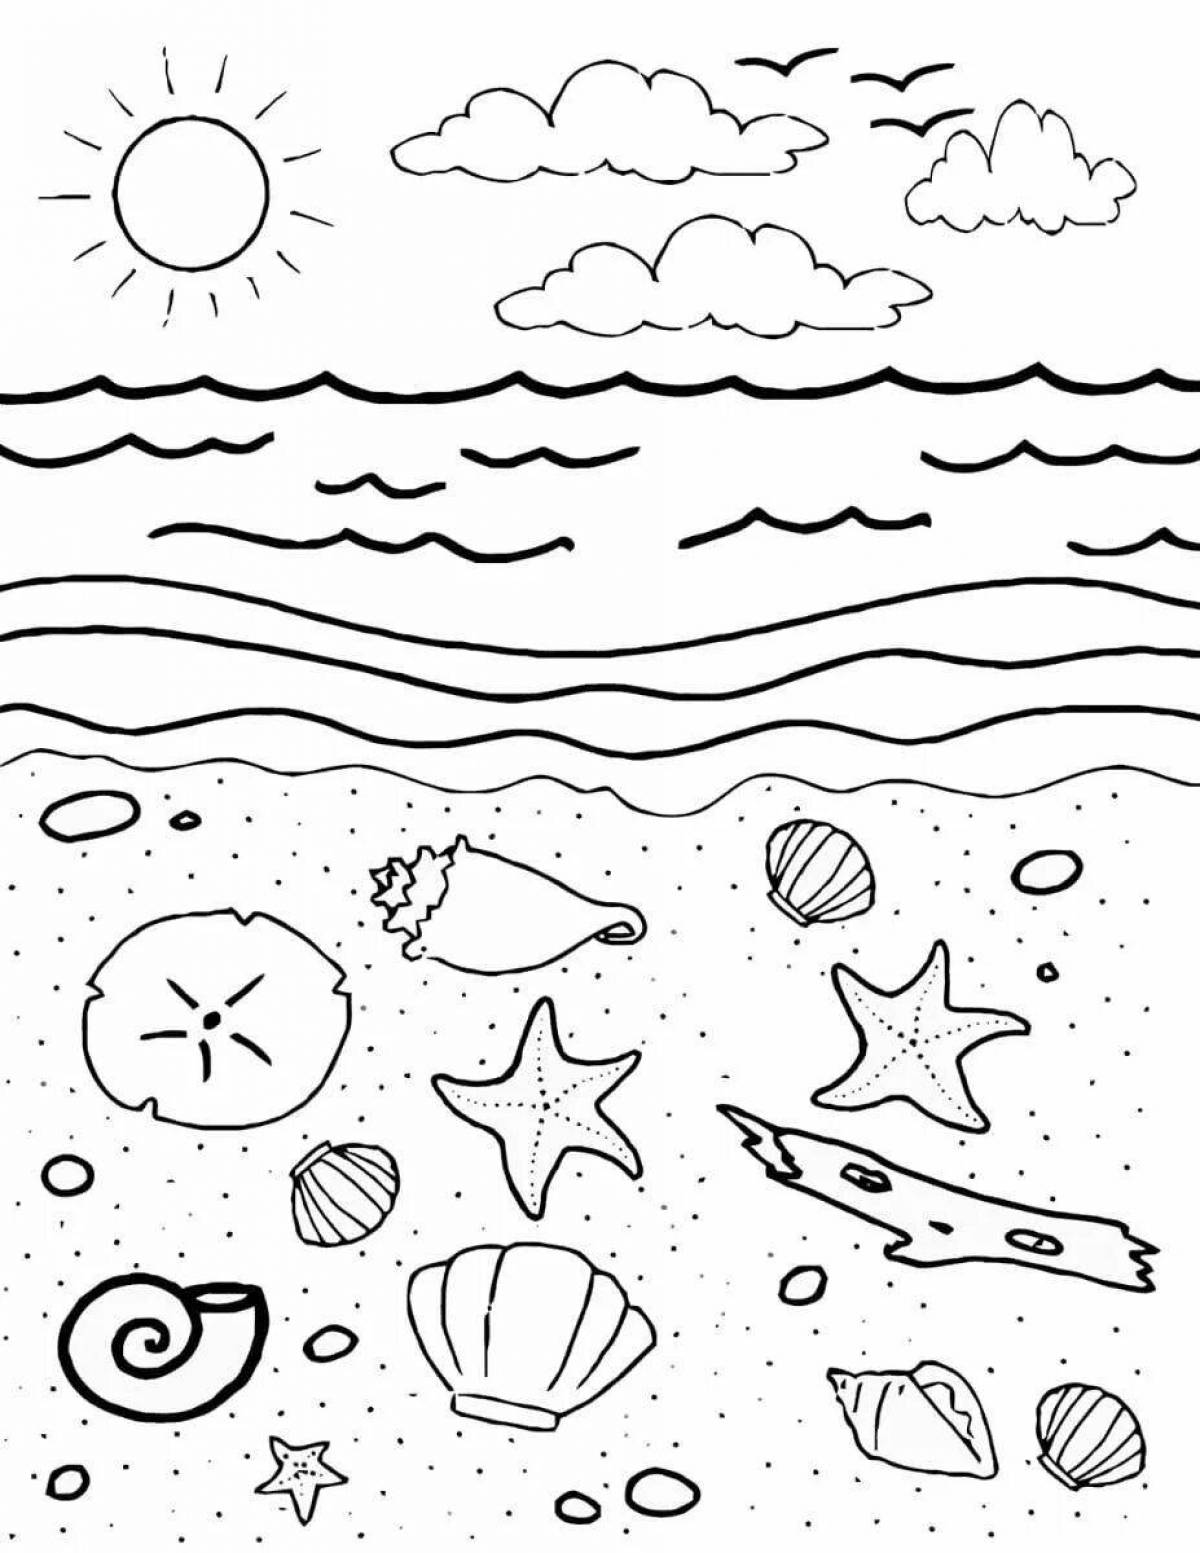 Calm seascape coloring book